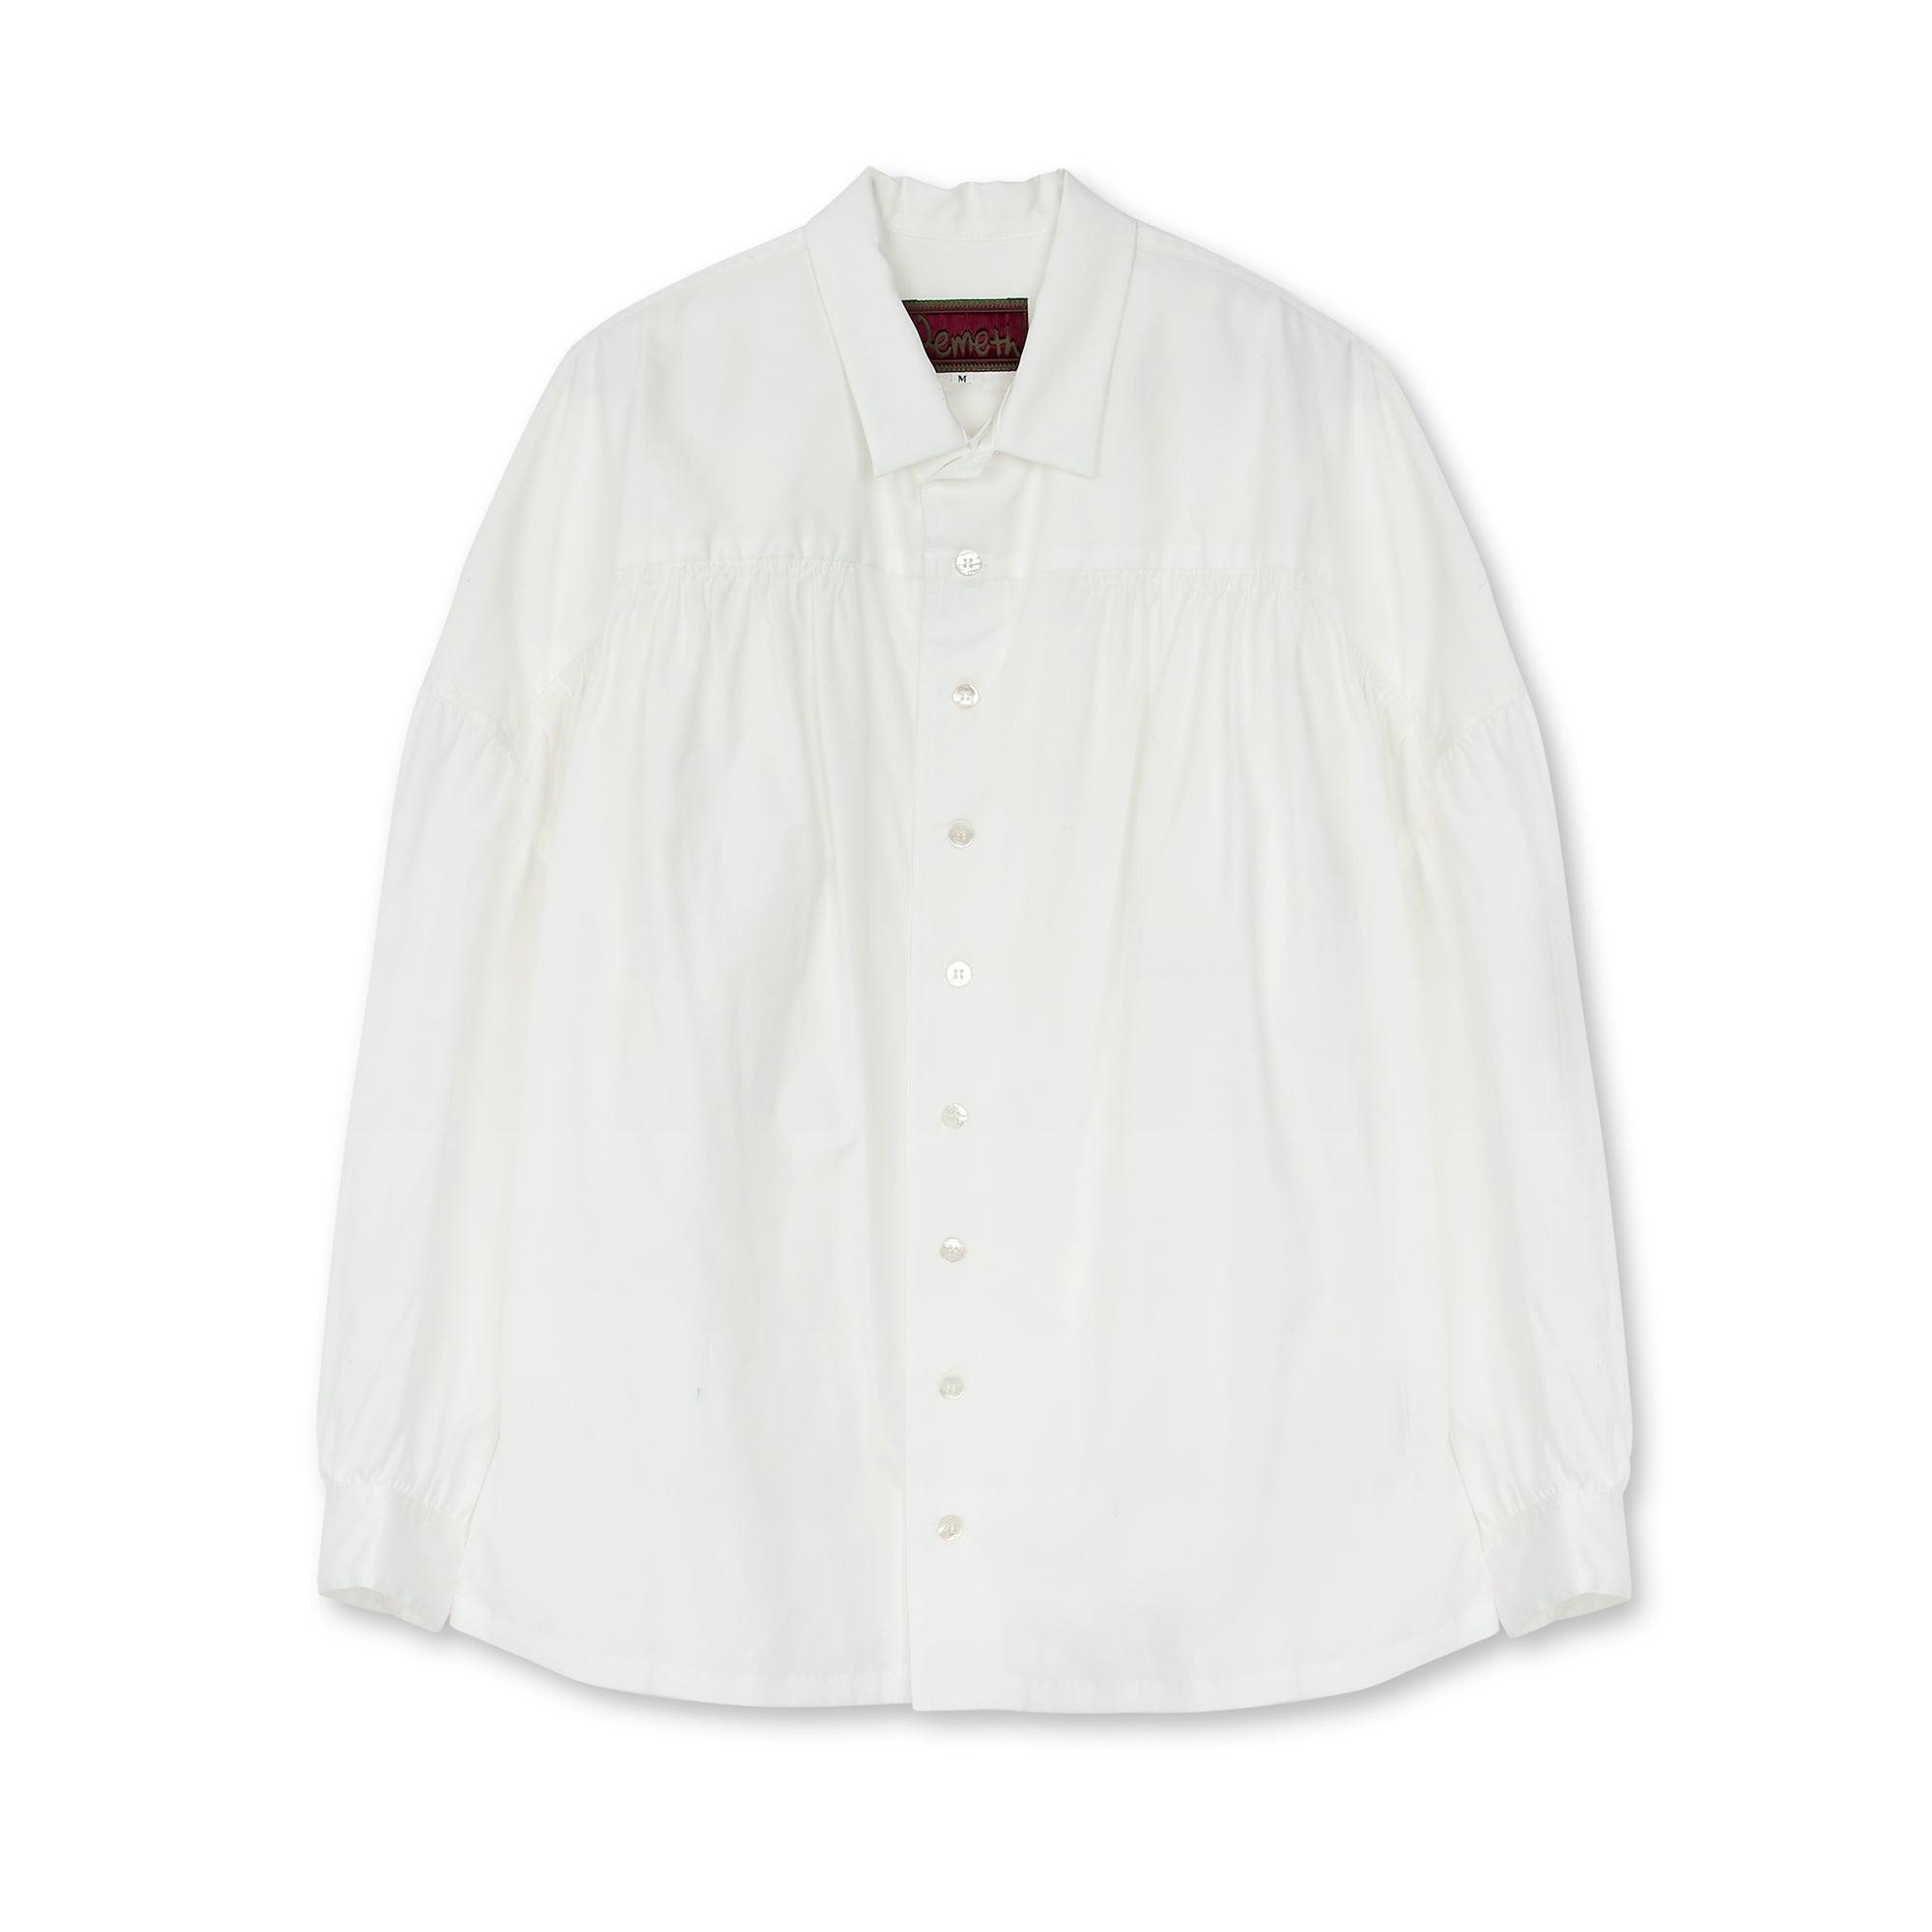 Nemeth Men's Shirt 123C (White) by CHRISTOPHER NEMETH